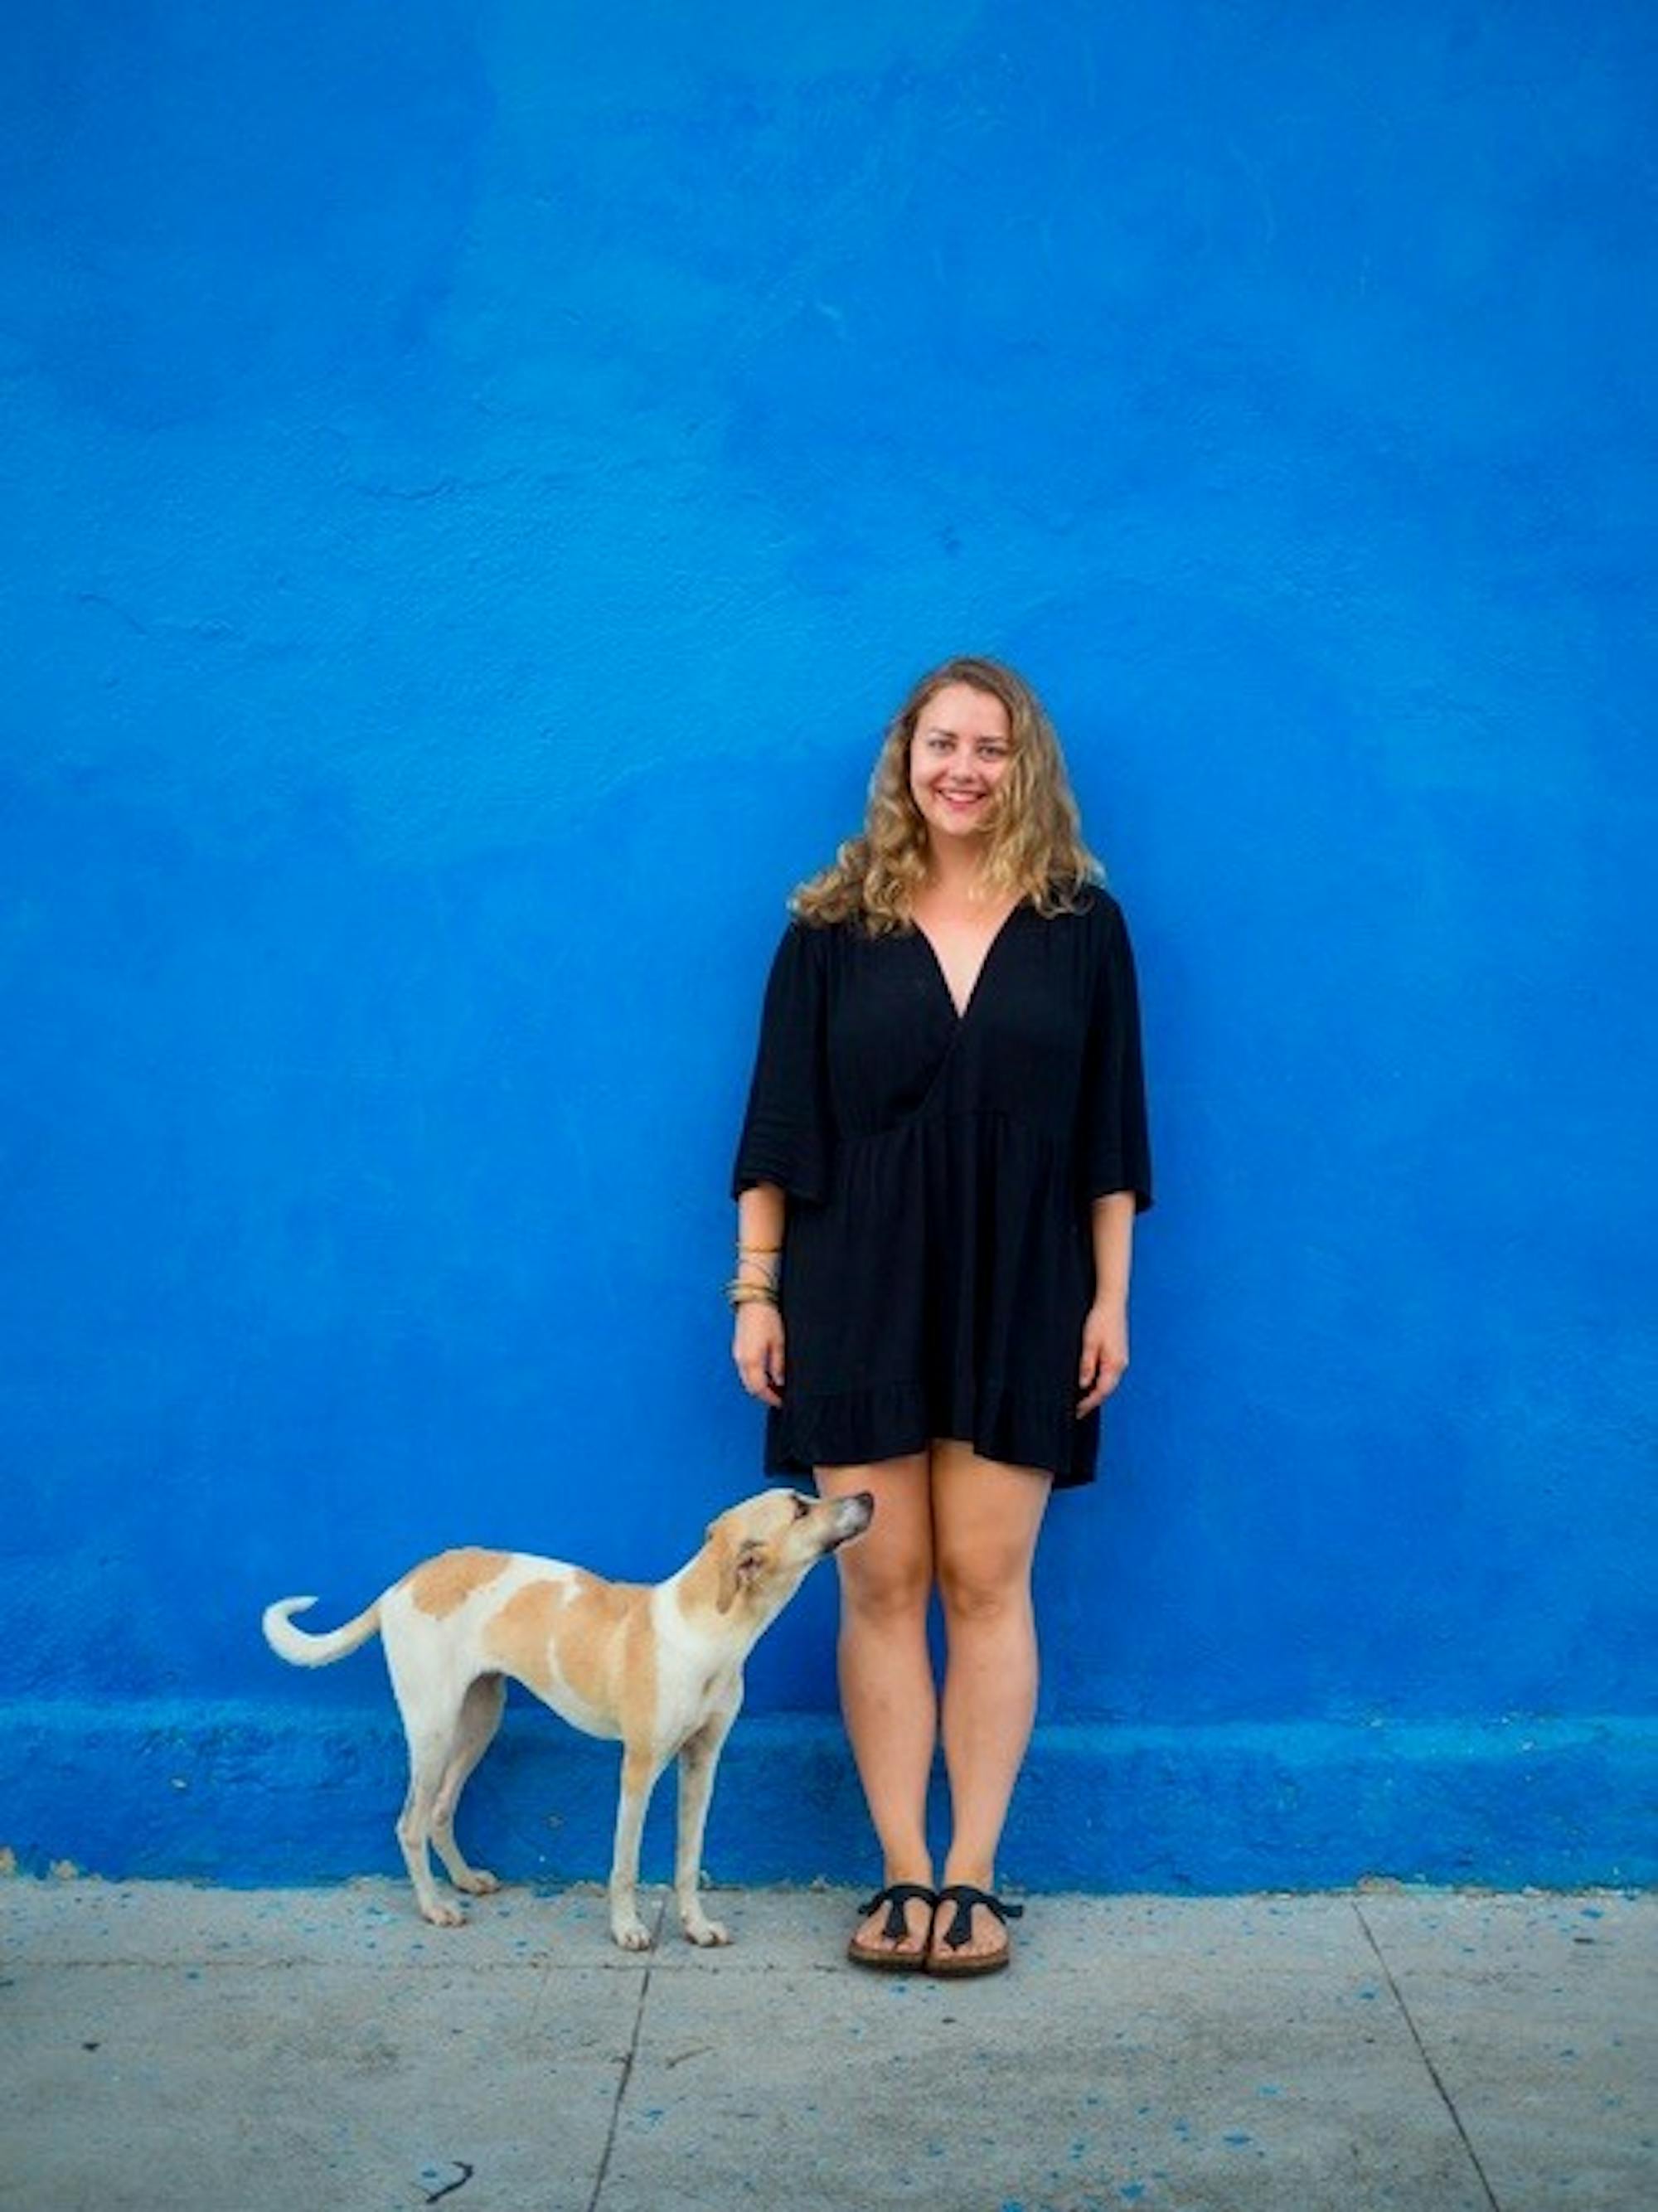 Alexandra posed with a furry friend in Havana, Cuba.